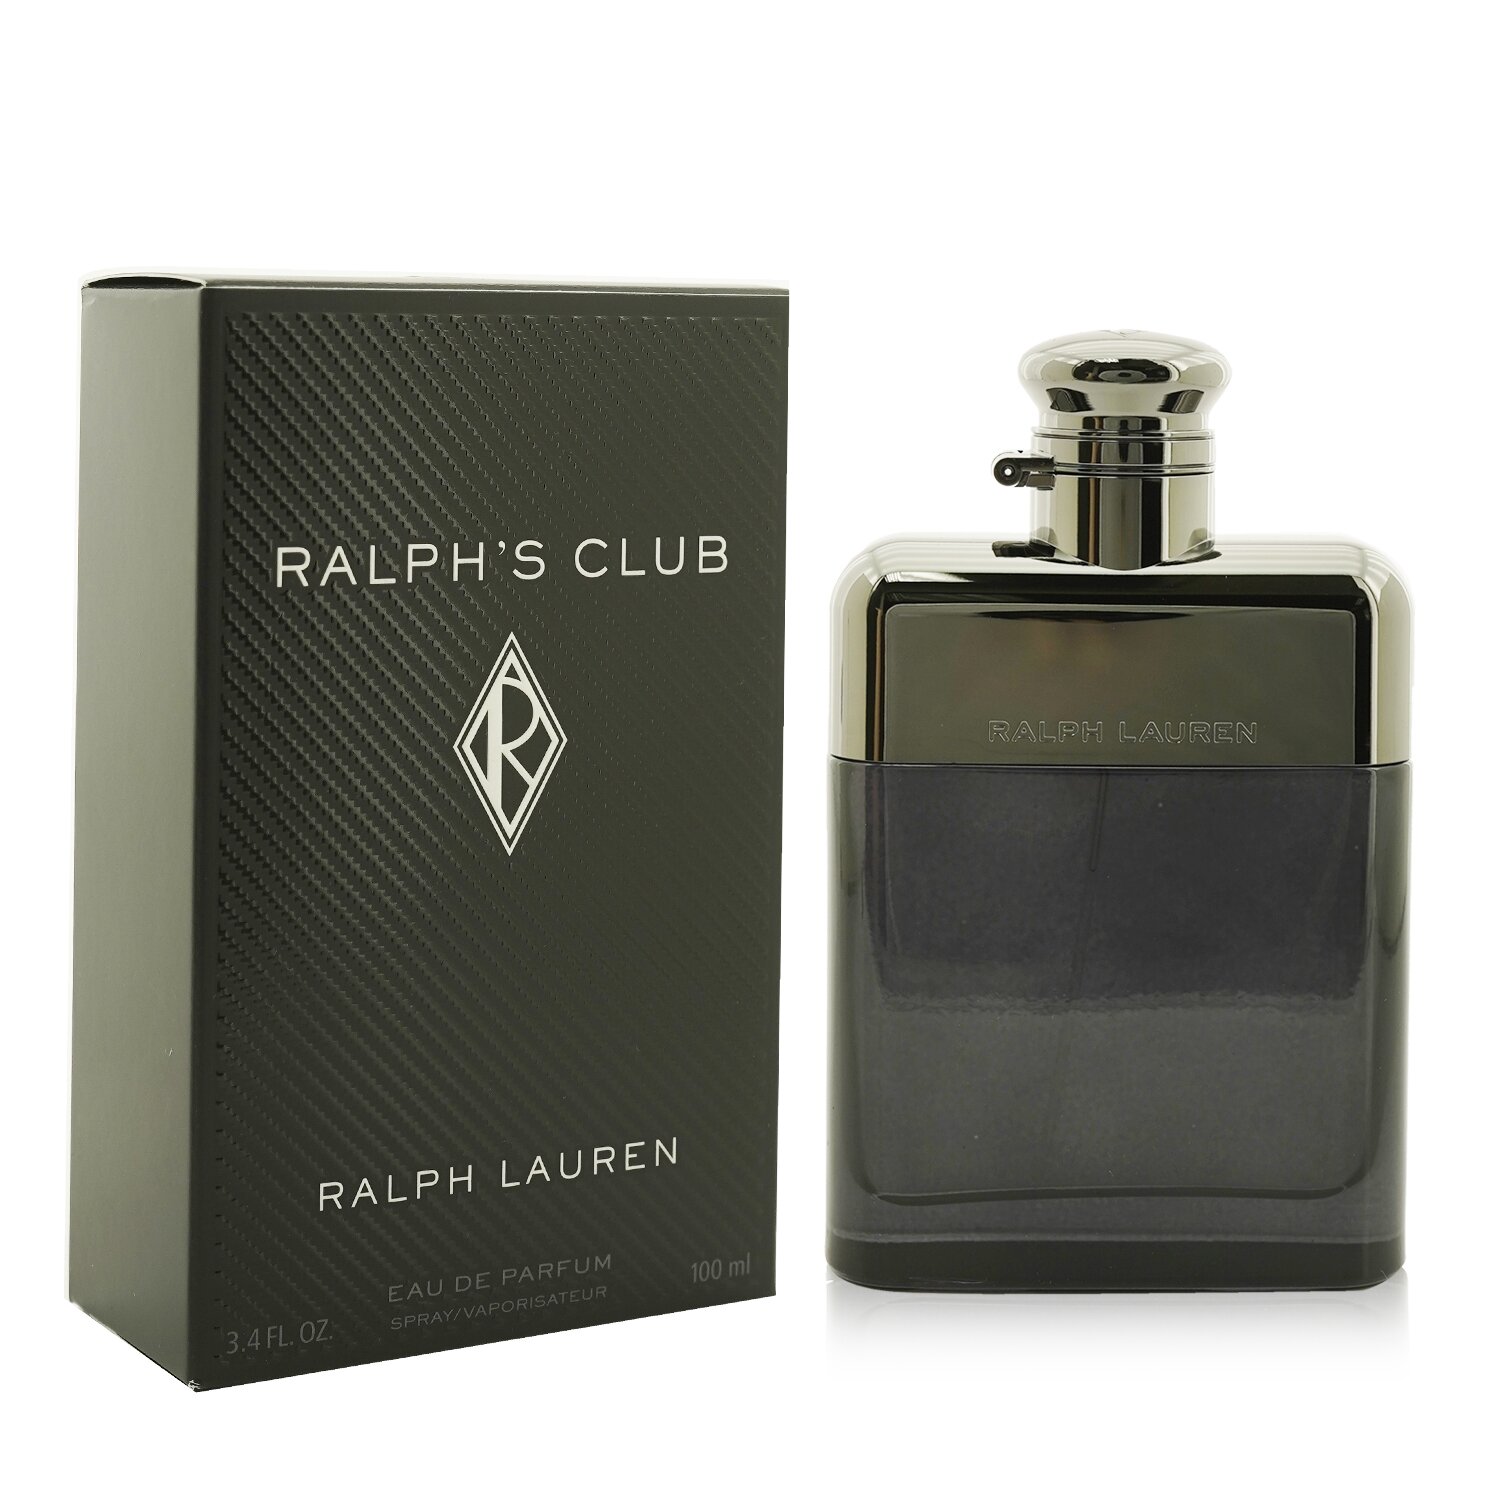 Lauren Women's Perfume By Ralph Lauren 4oz/120ml Eau De Toilette Spray